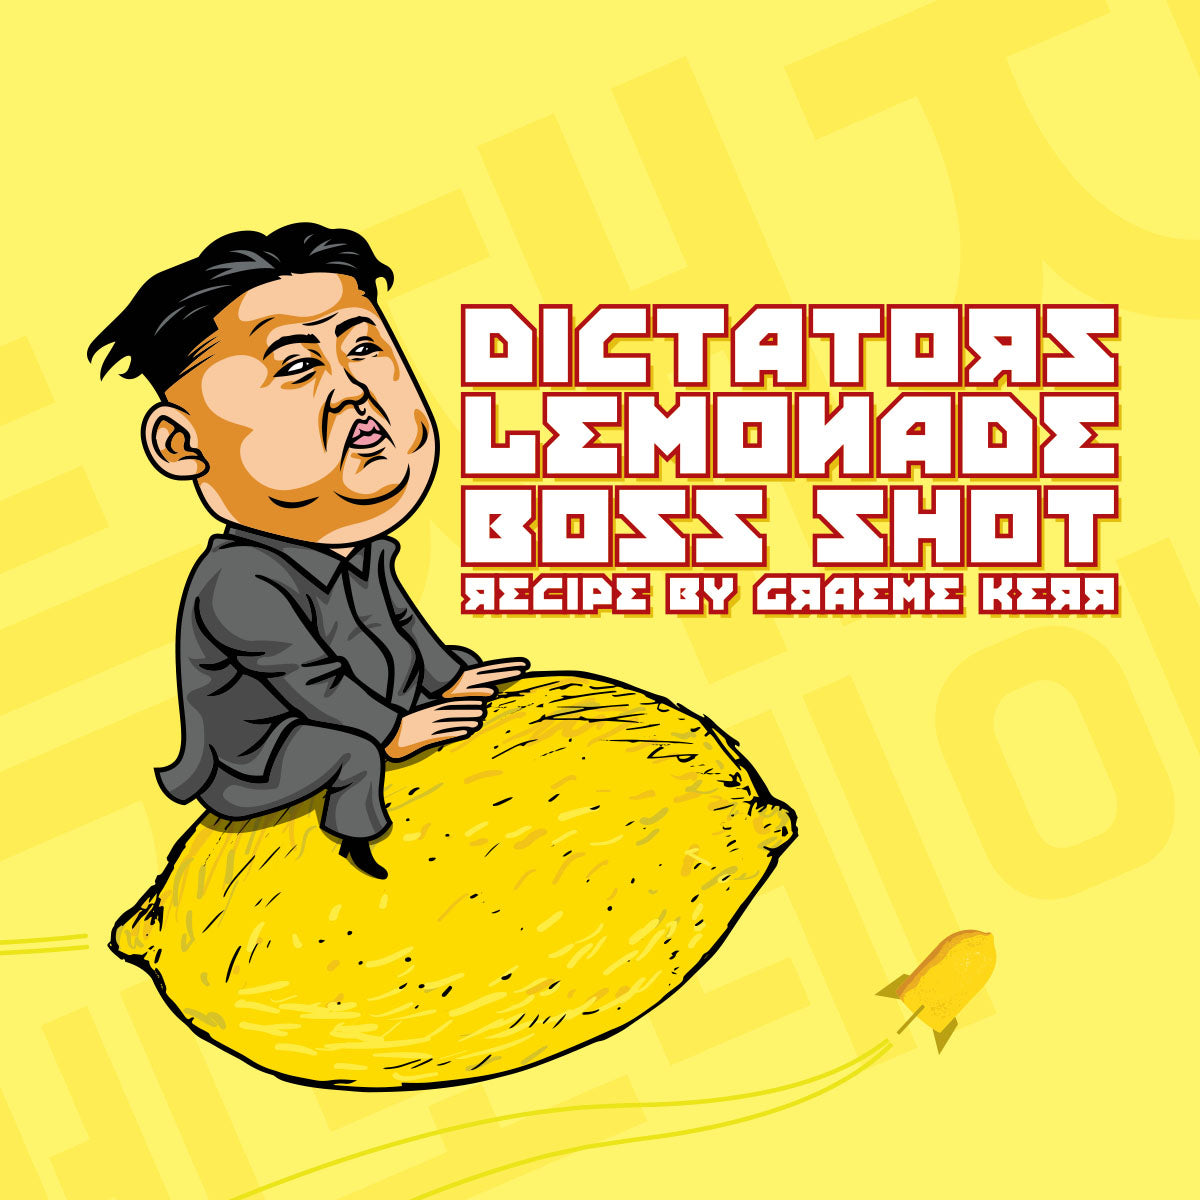 Dictators Lemonade - Flavour Boss